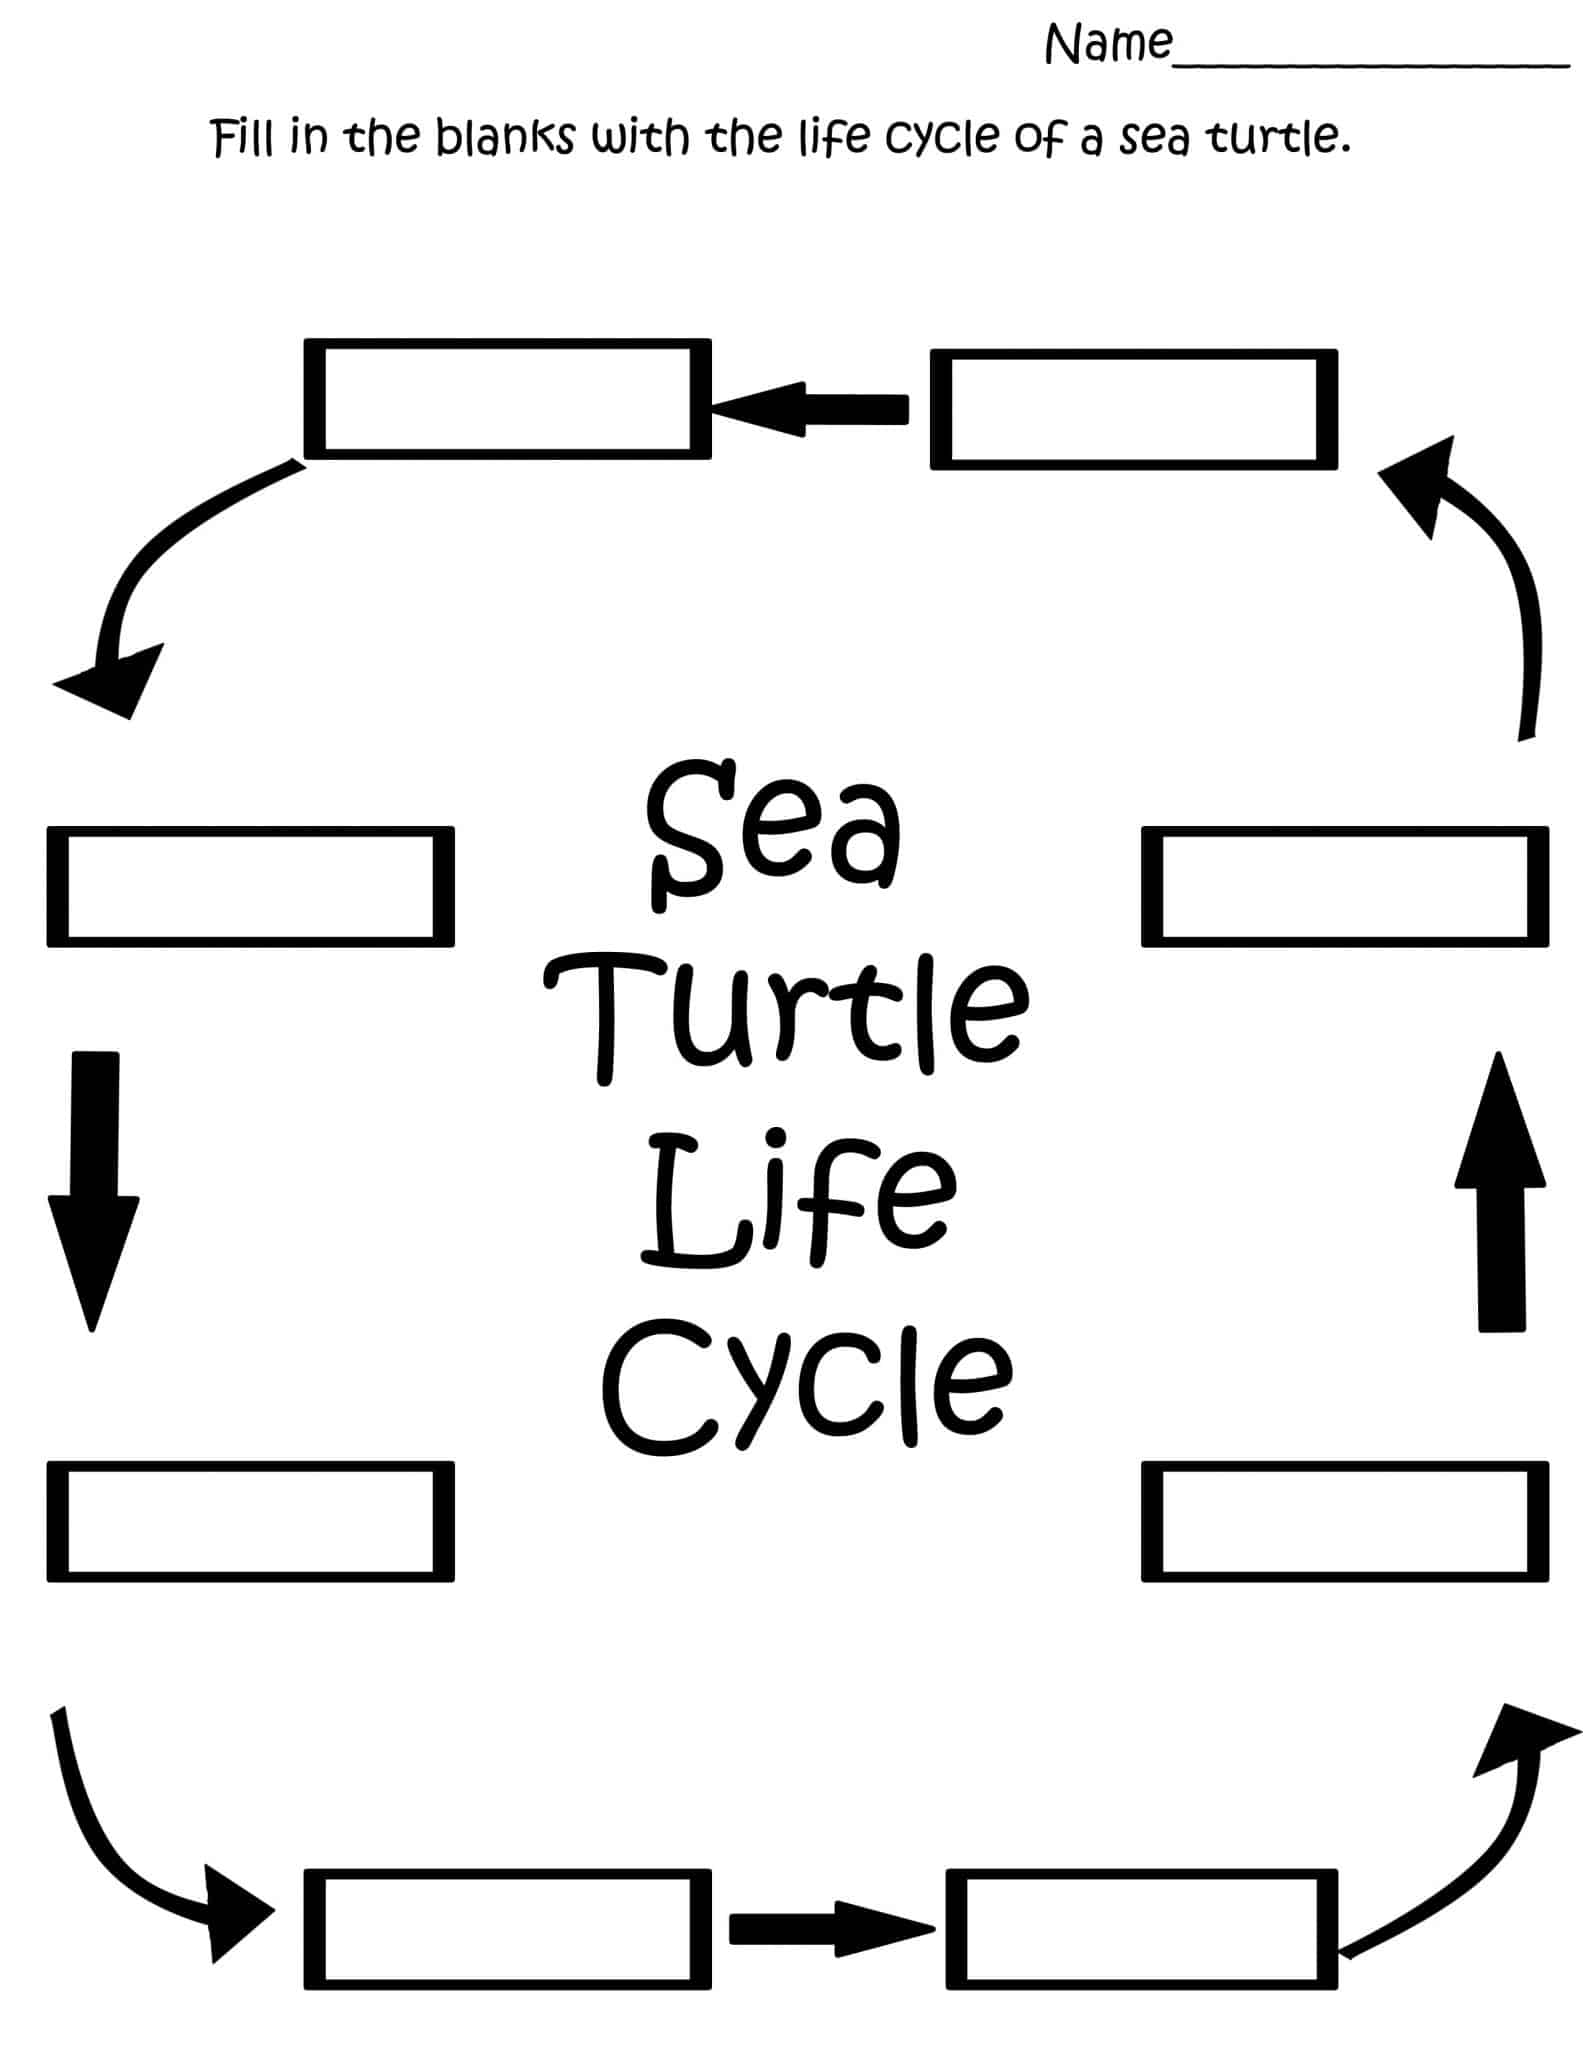 Life Cycle of a Sea Turtle - Free Printable worksheet for the life cycle of a sea turtle